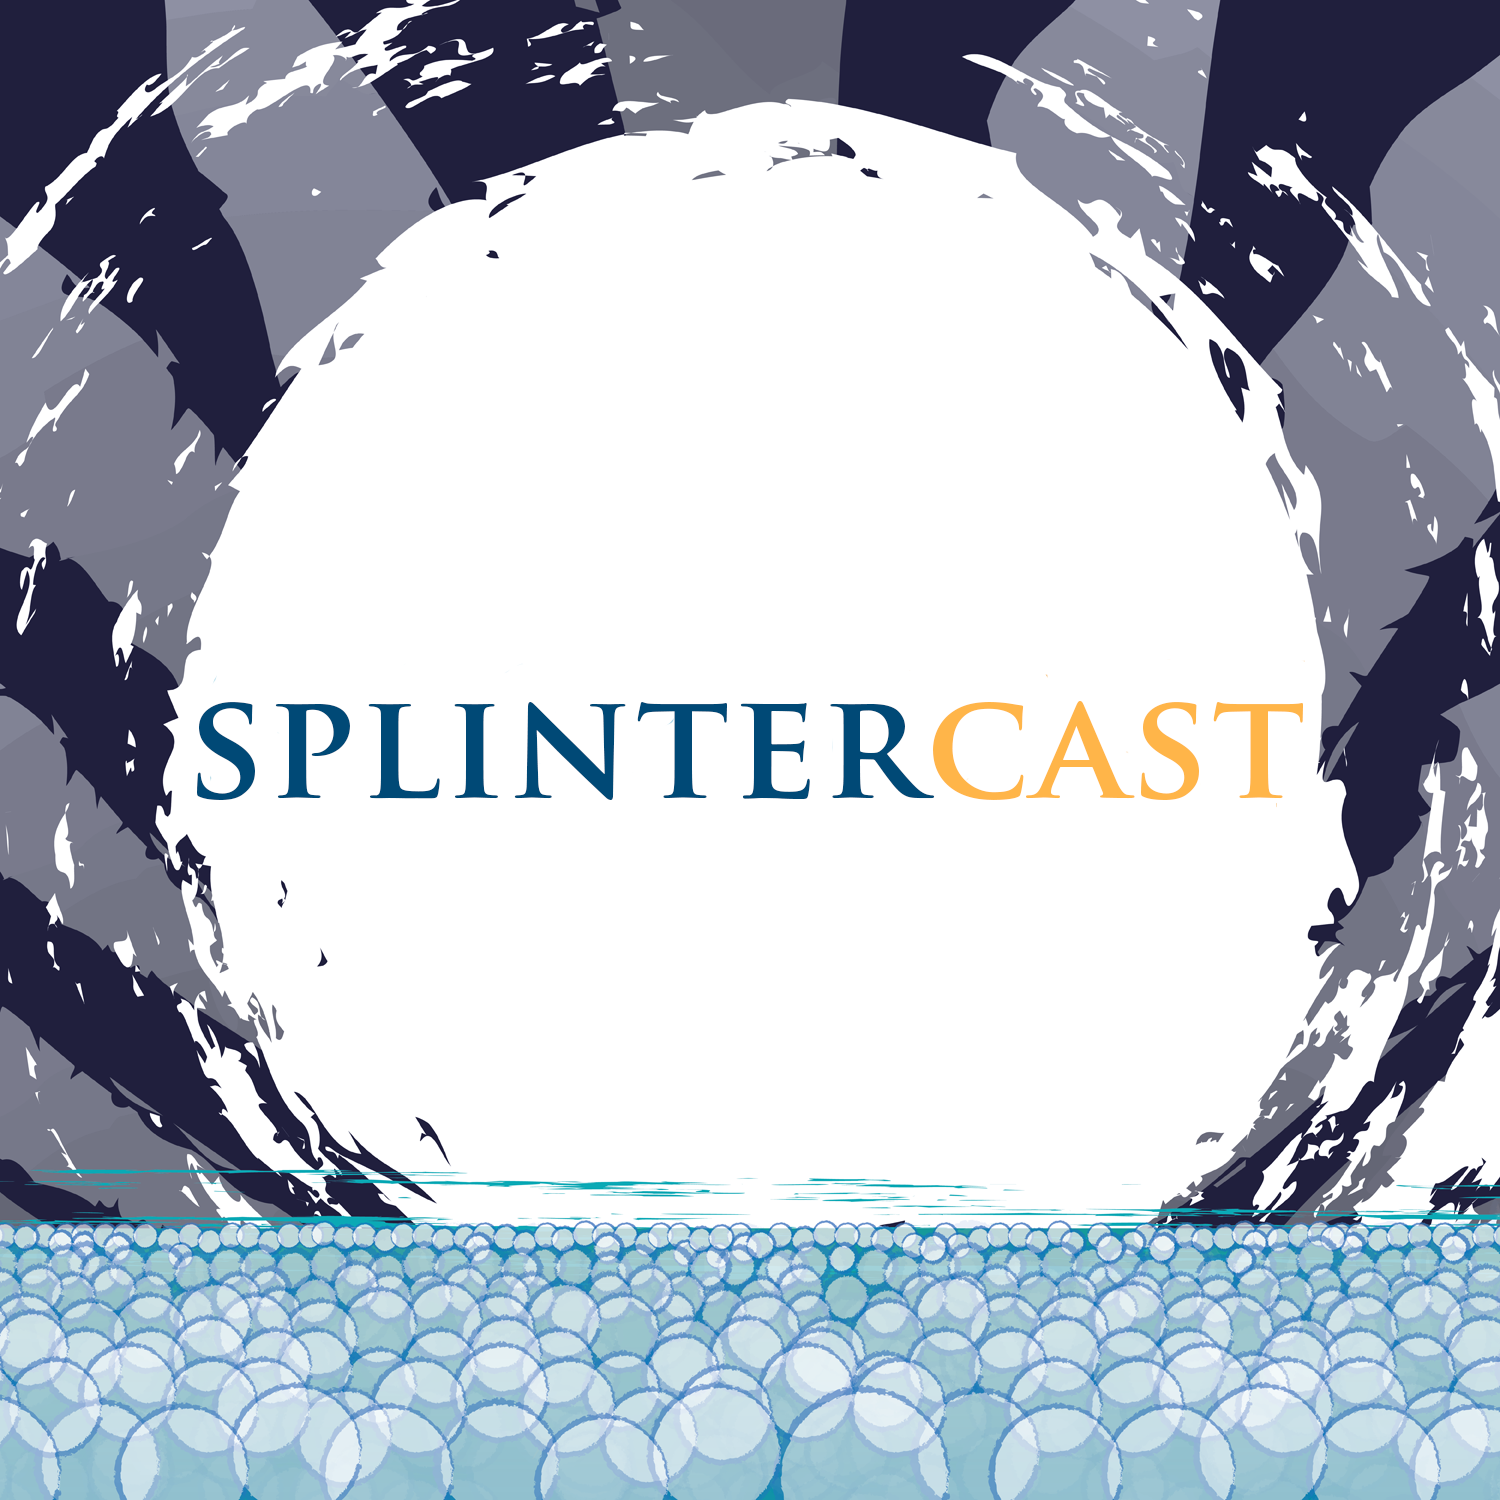 More information about "Splintercast: Shadow & Bone Season 2"